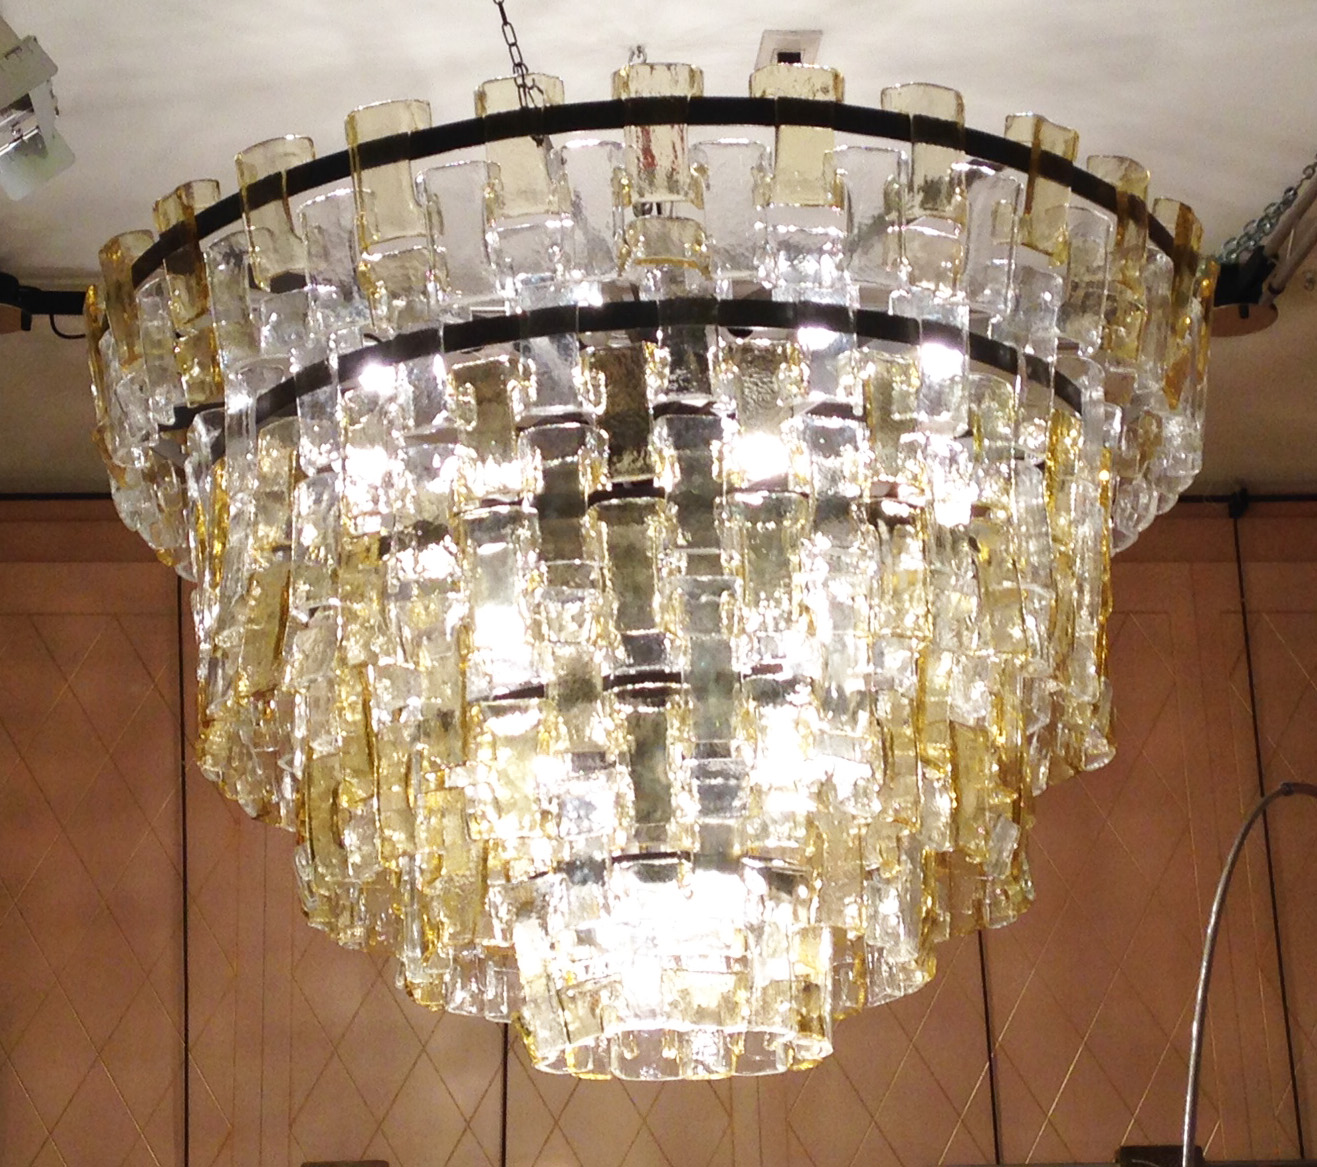 Lampadari vintage in ottone, vetro, ferro battuto - Robertaebasta®